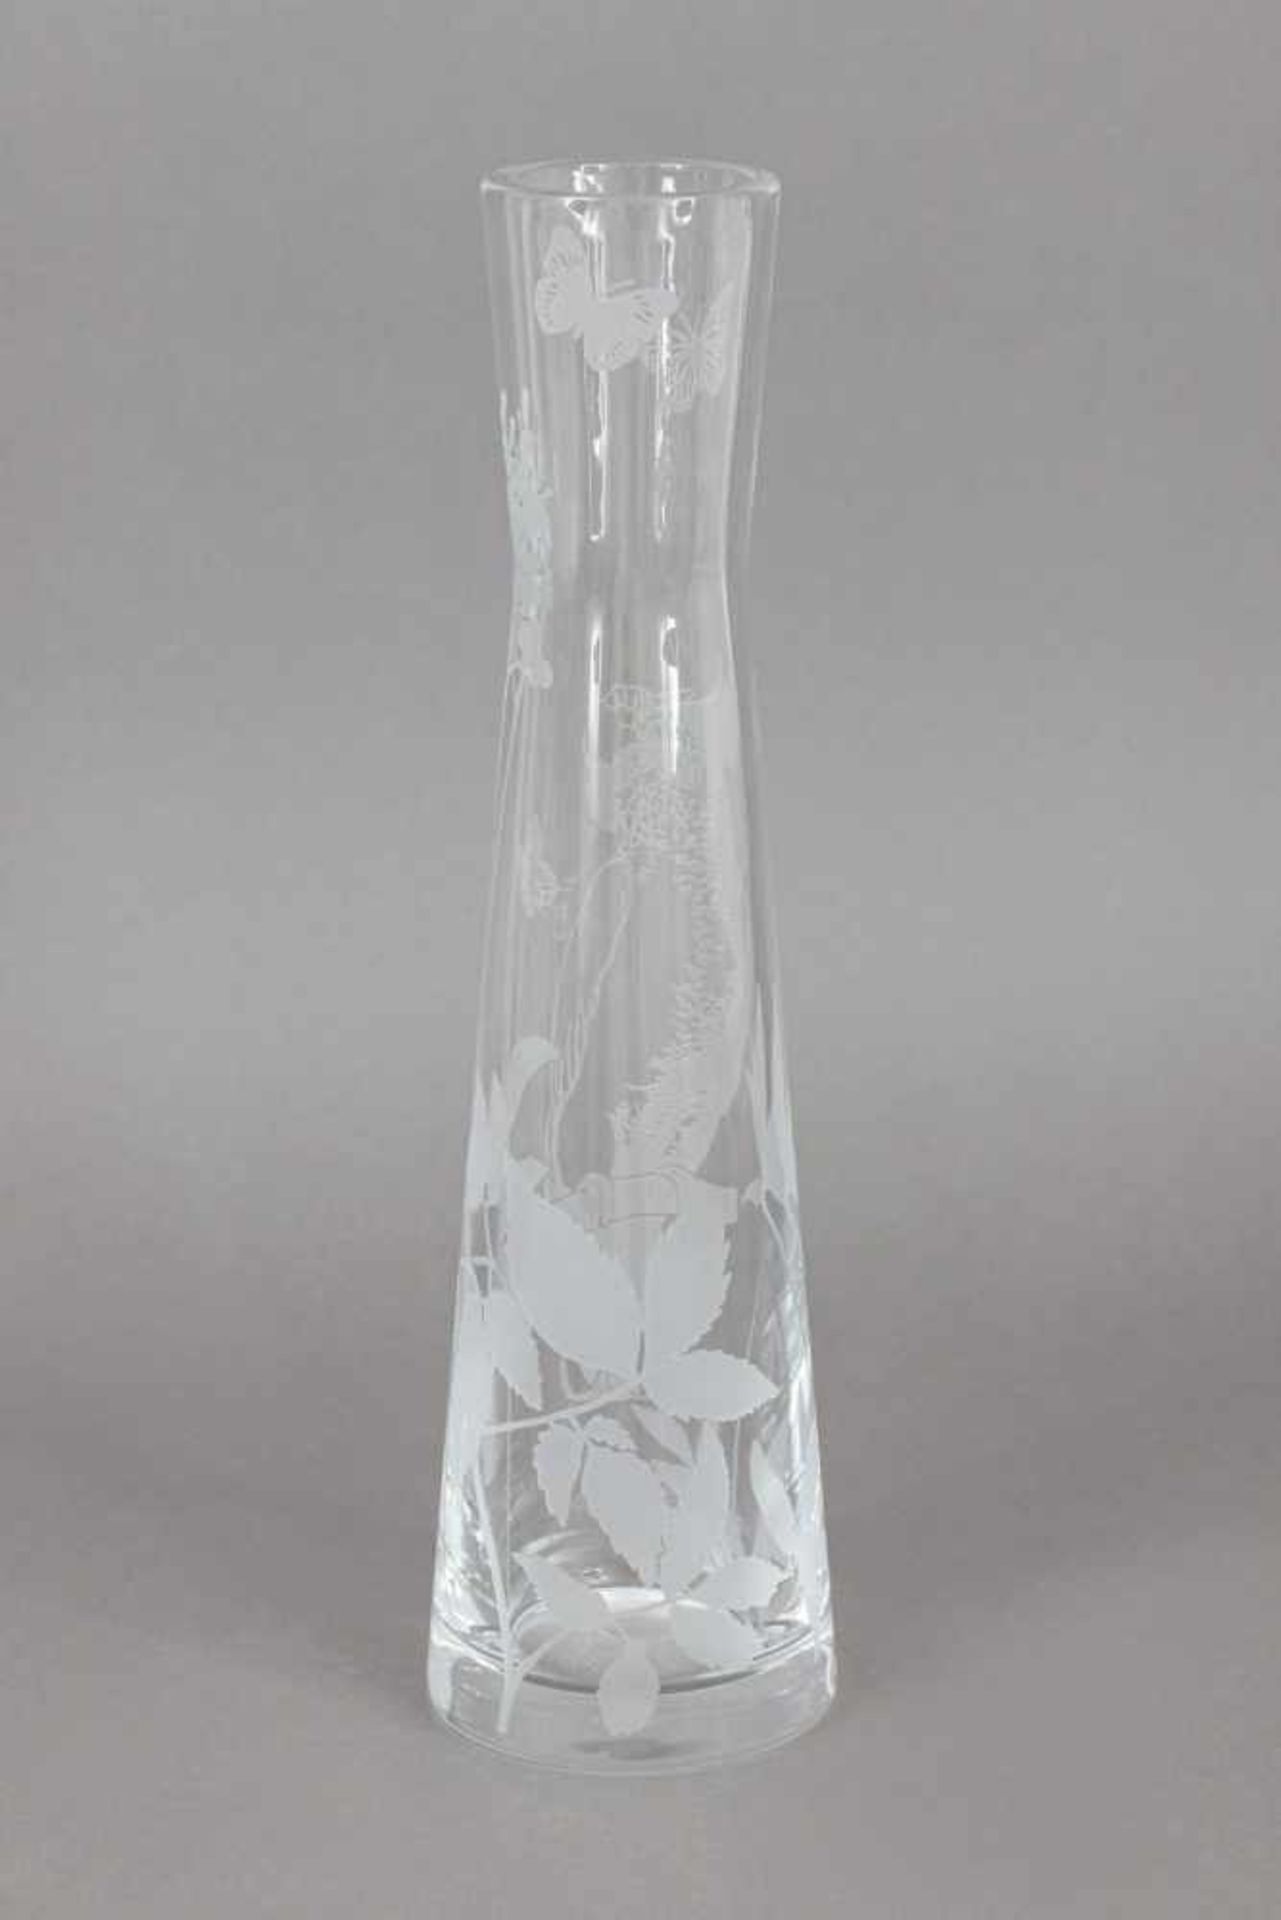 BACCARAT Stangenvase farbloses Glas, leicht kegelförmiger Korpus, Wandung umlaufend mit geätztem - Bild 4 aus 4